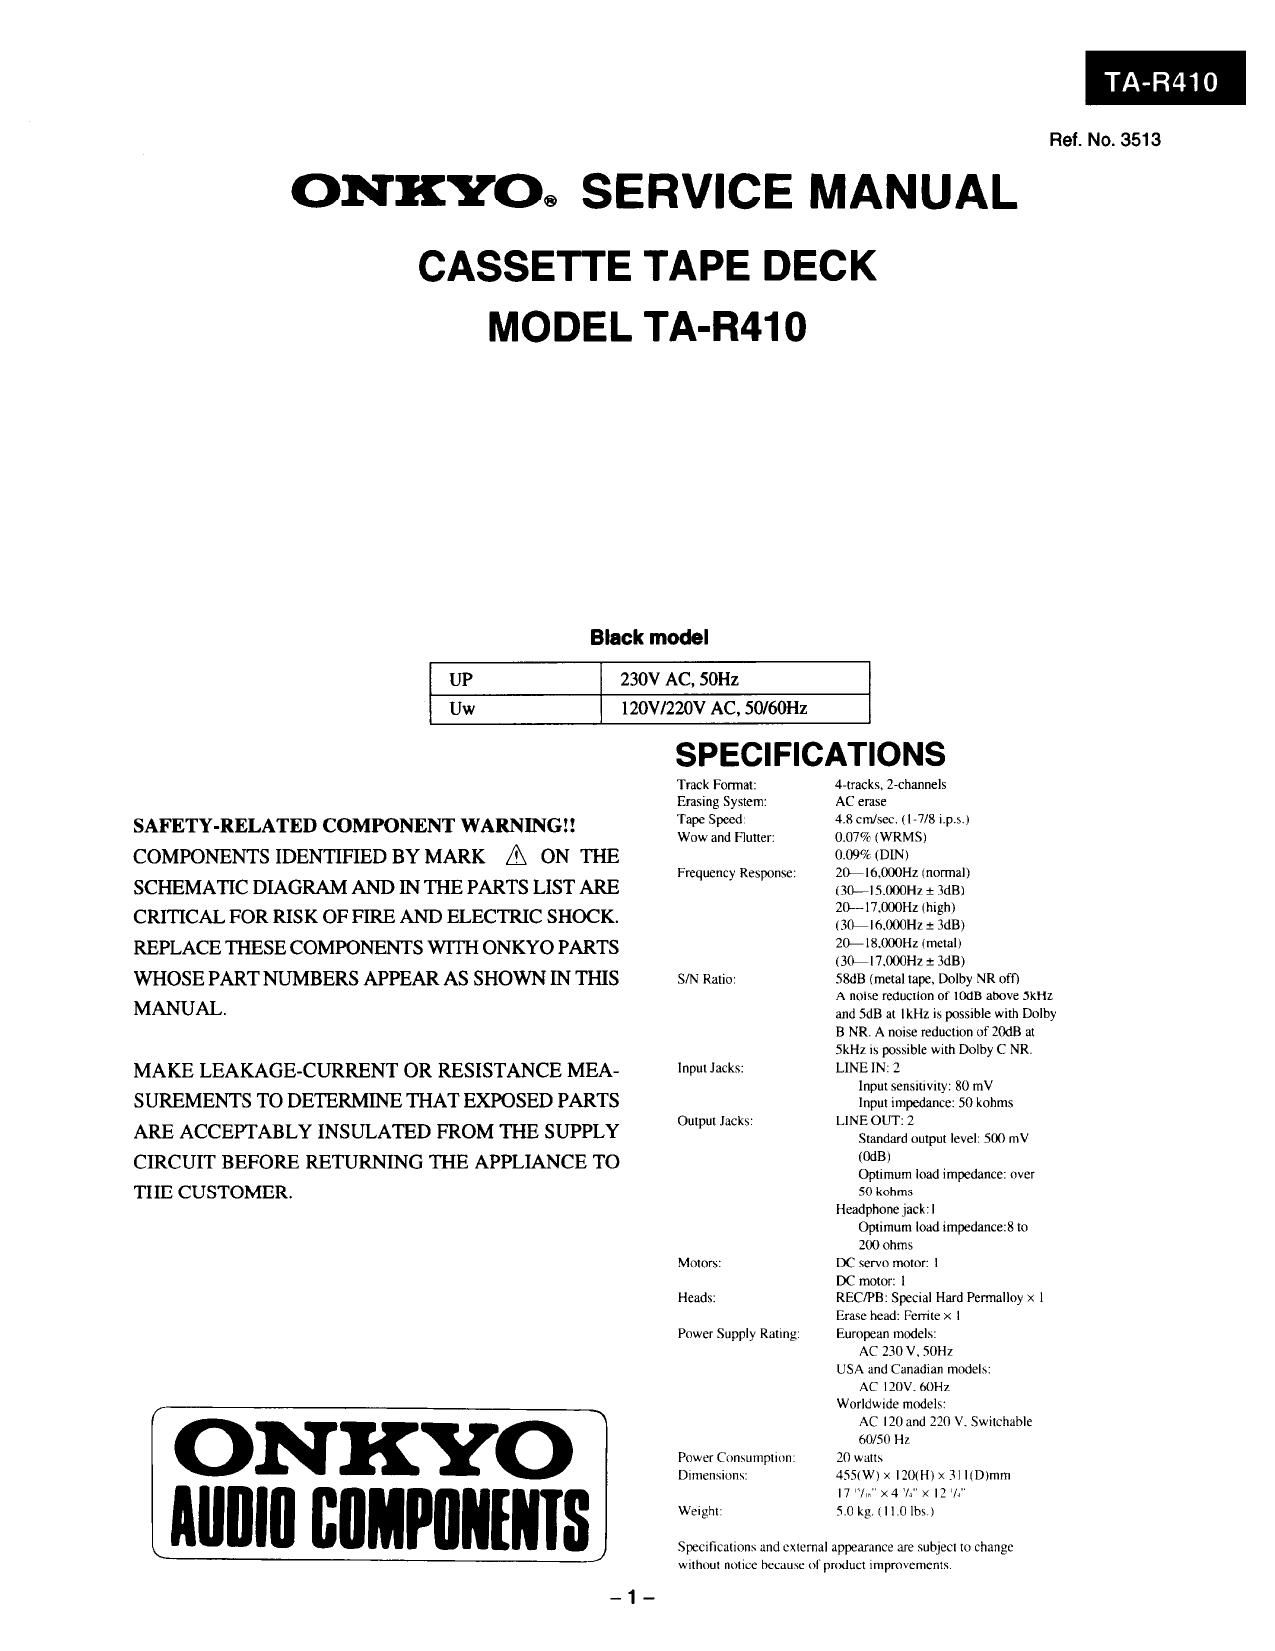 Onkyo TAR 410 Service Manual